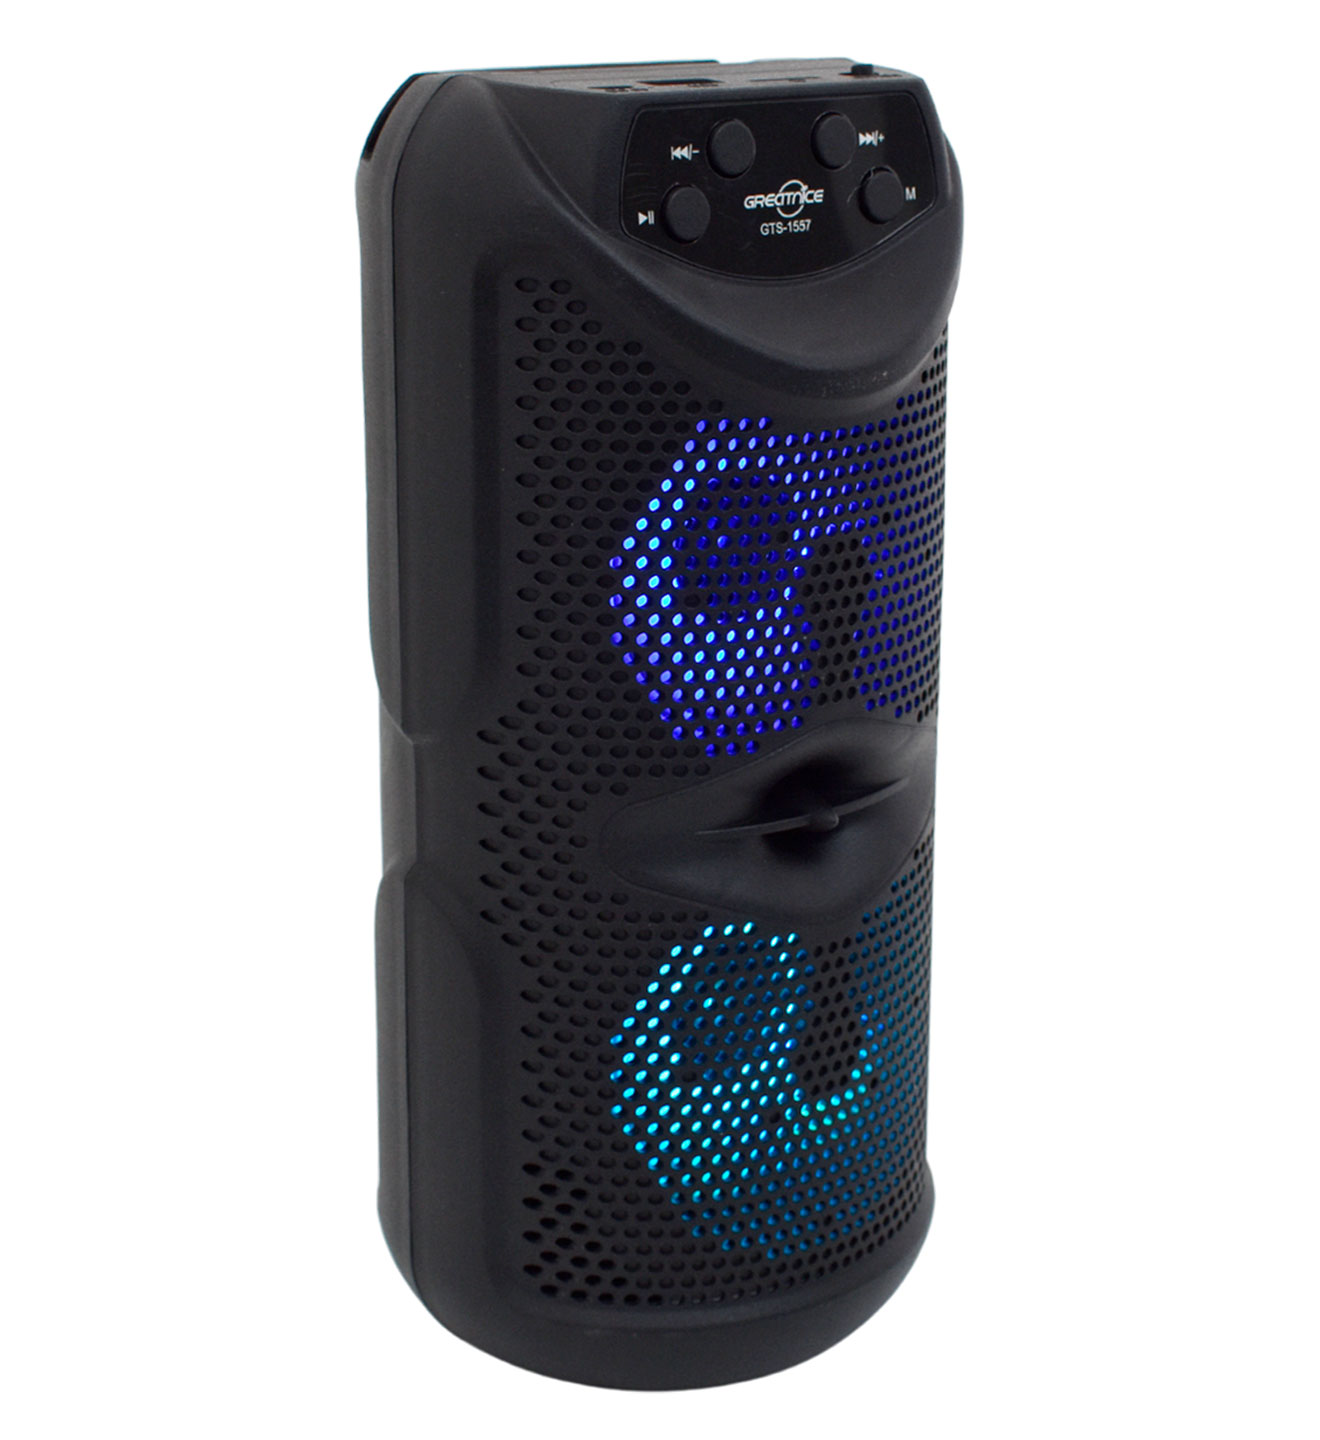 GTS-1557 Tower Speaker